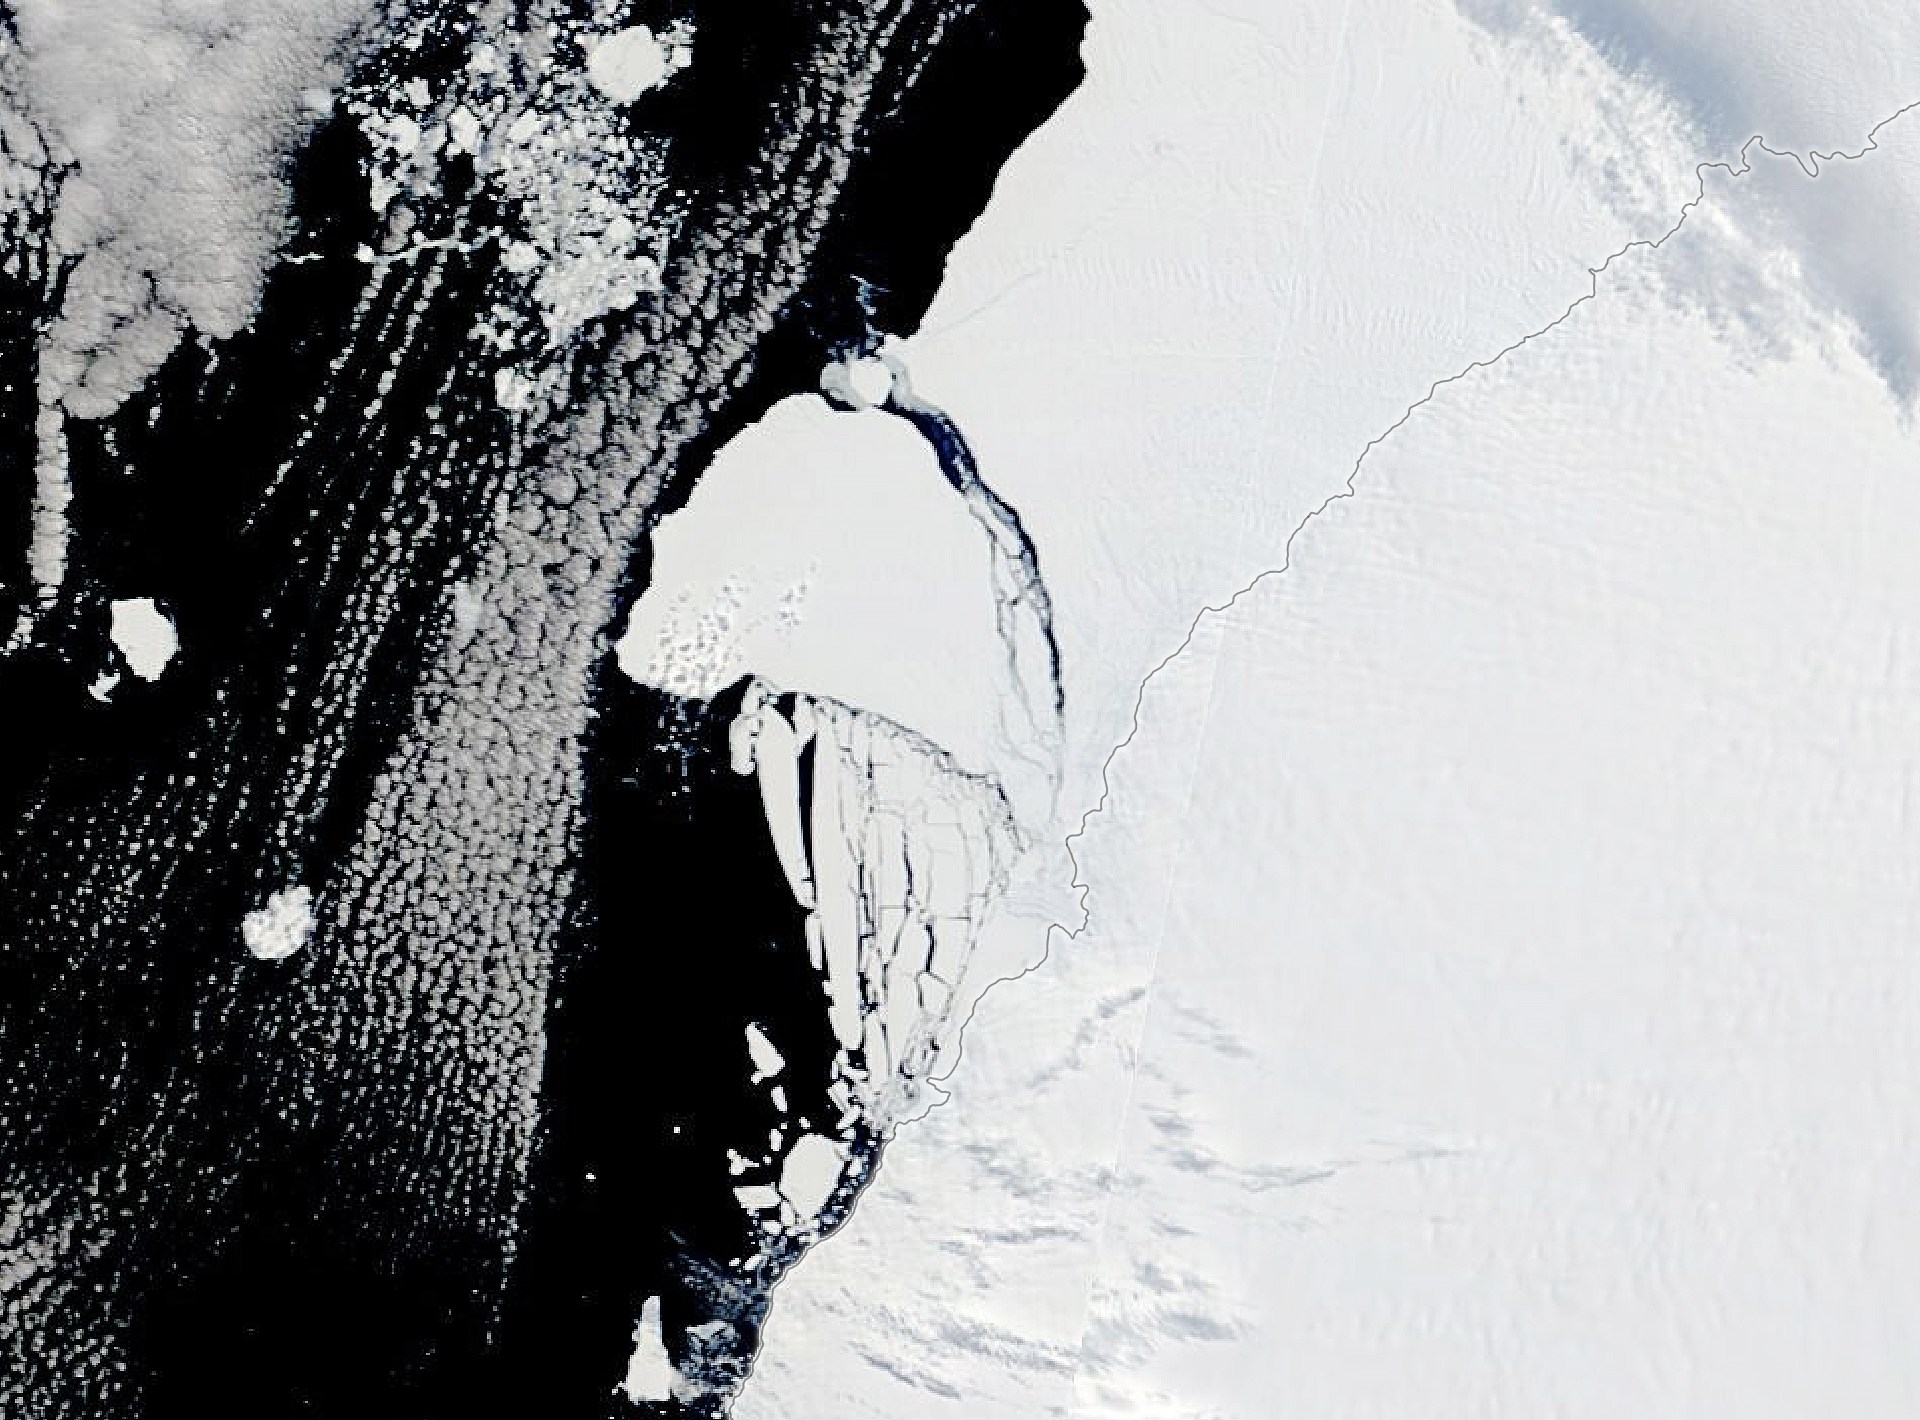 Giant iceberg breaks off near Antarctica research station